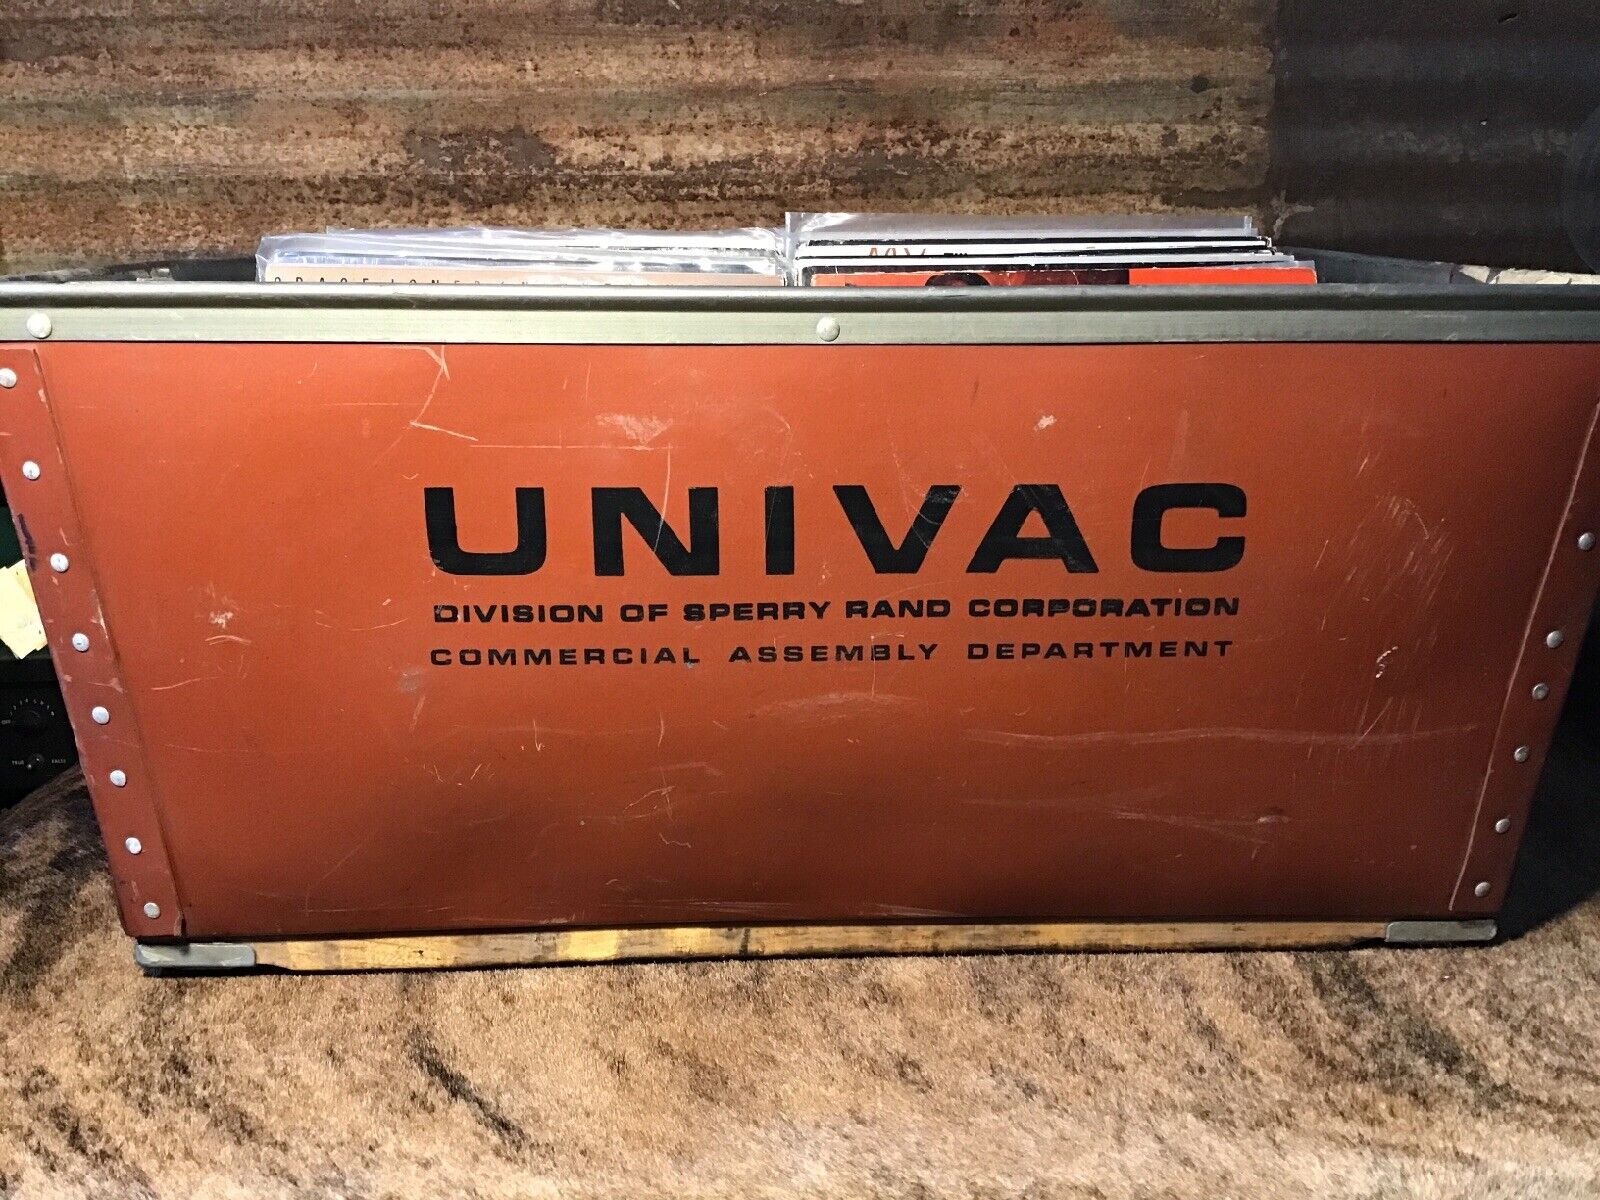 Vintage Sperry Rand UNIVAC Warehouse Tote ~ Heavy Duty ~ Record Bin?